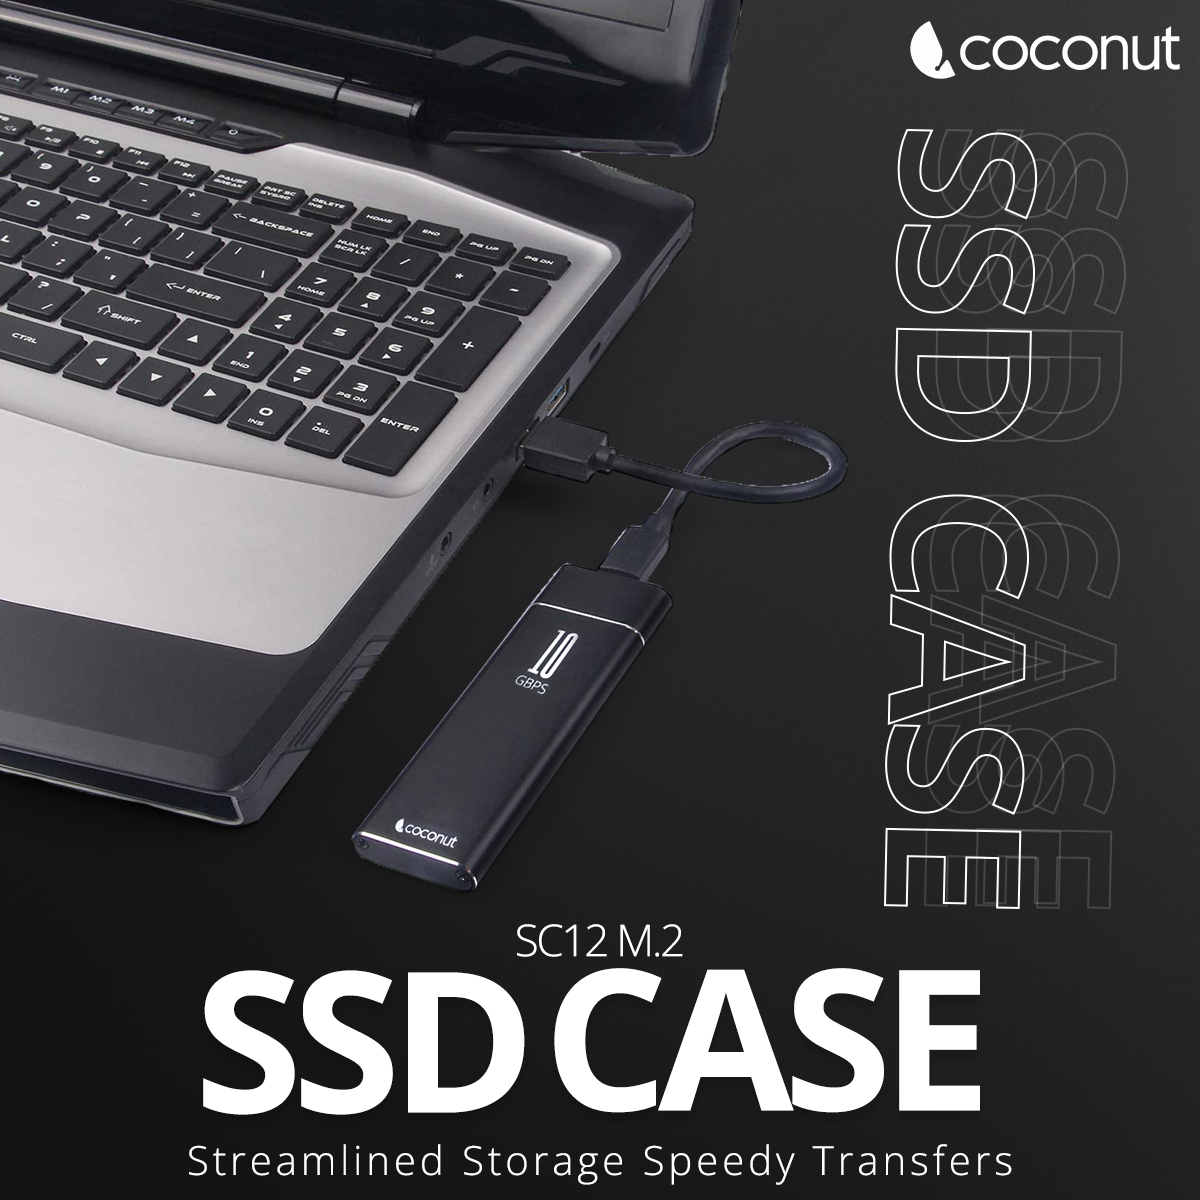 SC12 M.2/NVMe SSD Sata Casing, Premium Metal Body, USB 3.1 Speeds